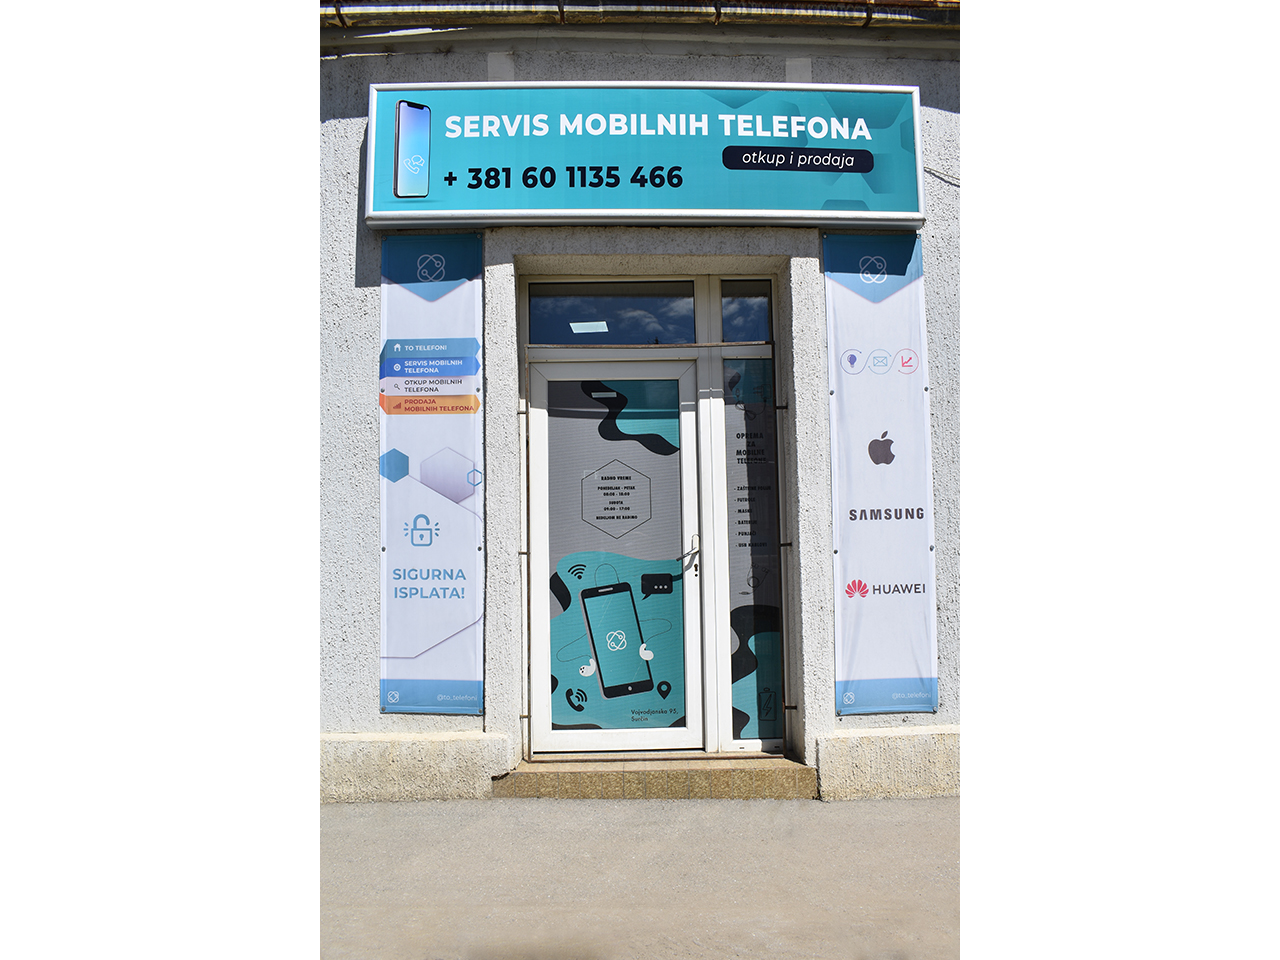 TO TELEFONI - SERVIS OTKUP PRODAJA MOBILNIH TELEFONA Servisi mobilnih telefona Beograd